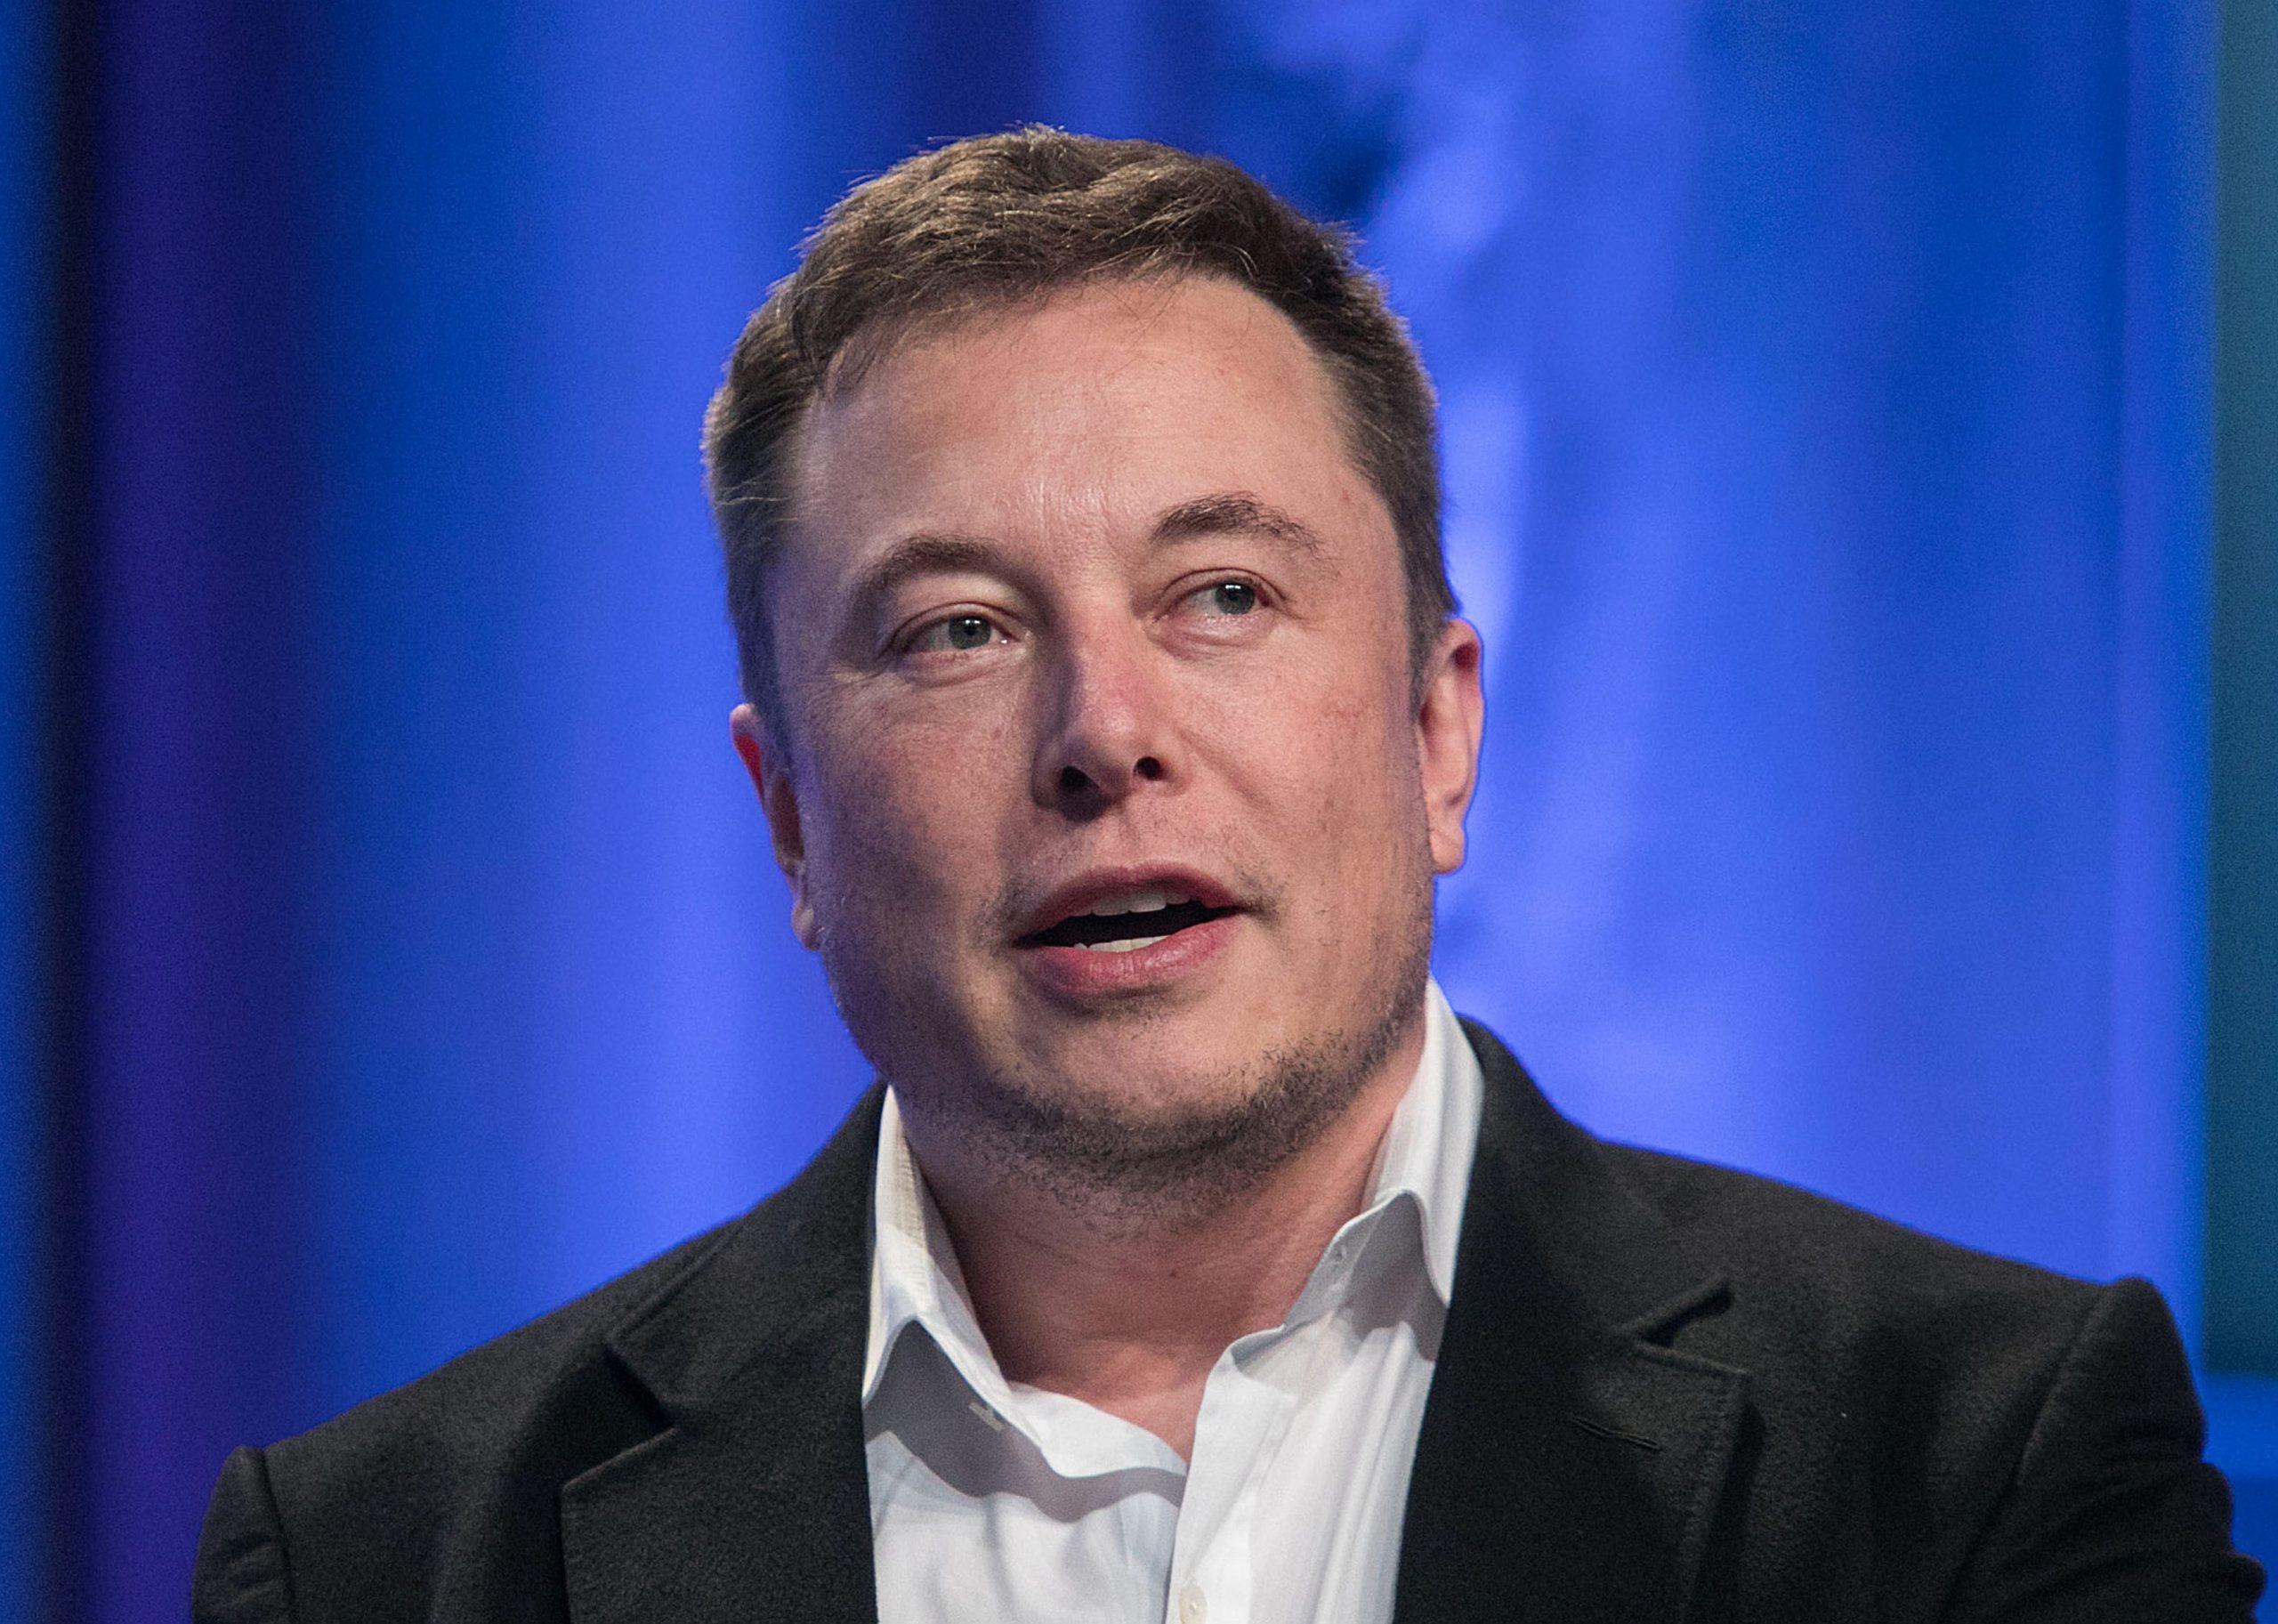 Elon Musk's Tesla eyeing up massive Valencia deal in Spain